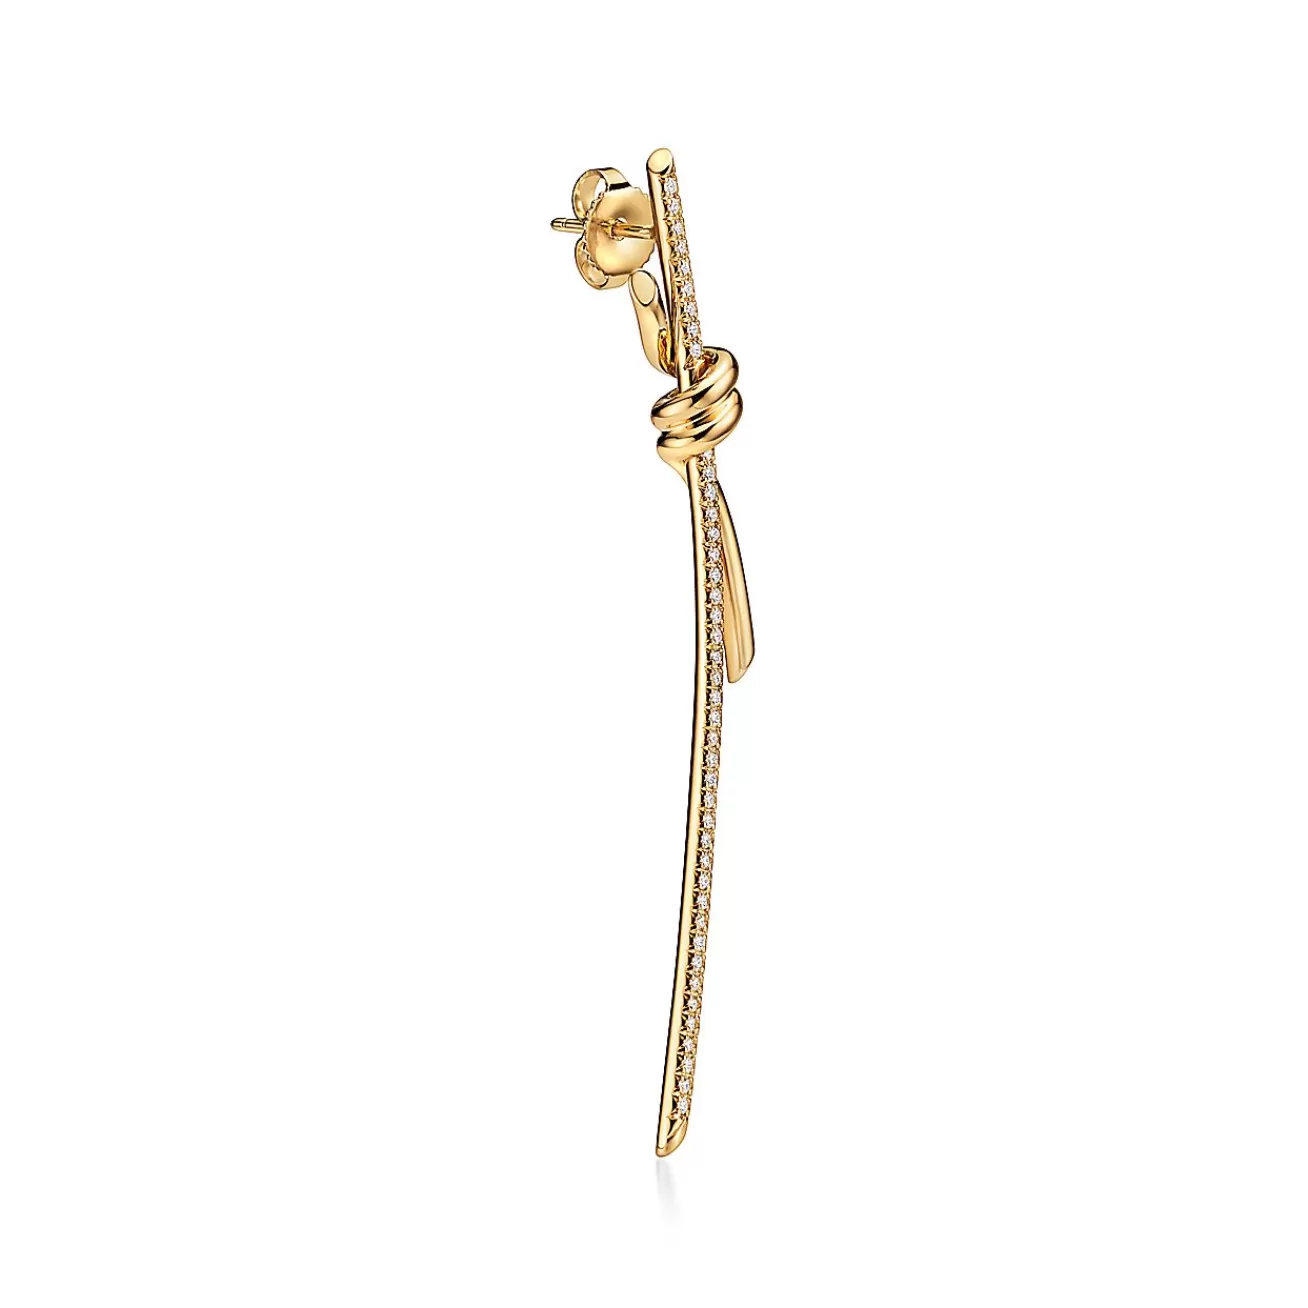 Tiffany & Co. Tiffany Knot Drop Earrings in Yellow Gold with Diamonds | ^ Earrings | Gold Jewelry